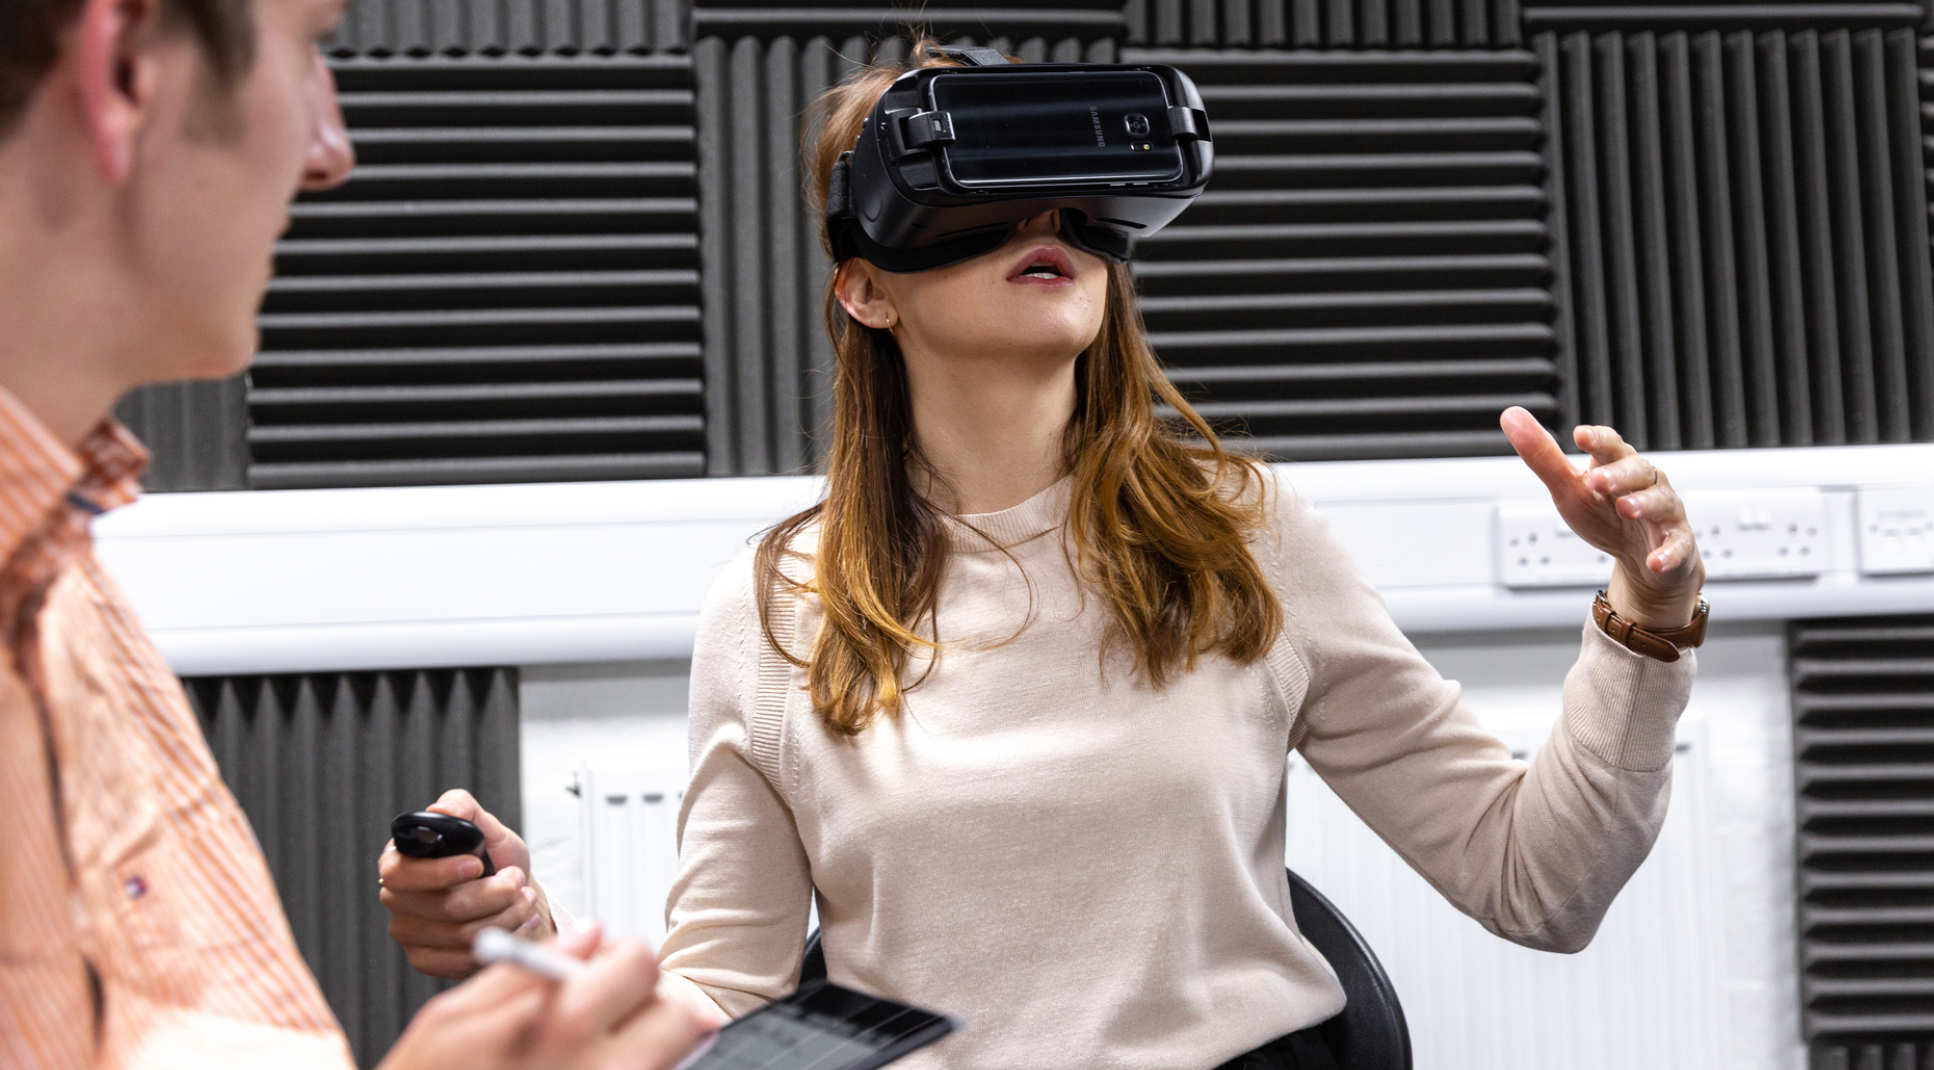 Dr Nejra Van Zalk uses virtual reality equipment with PhD student Ian Chard